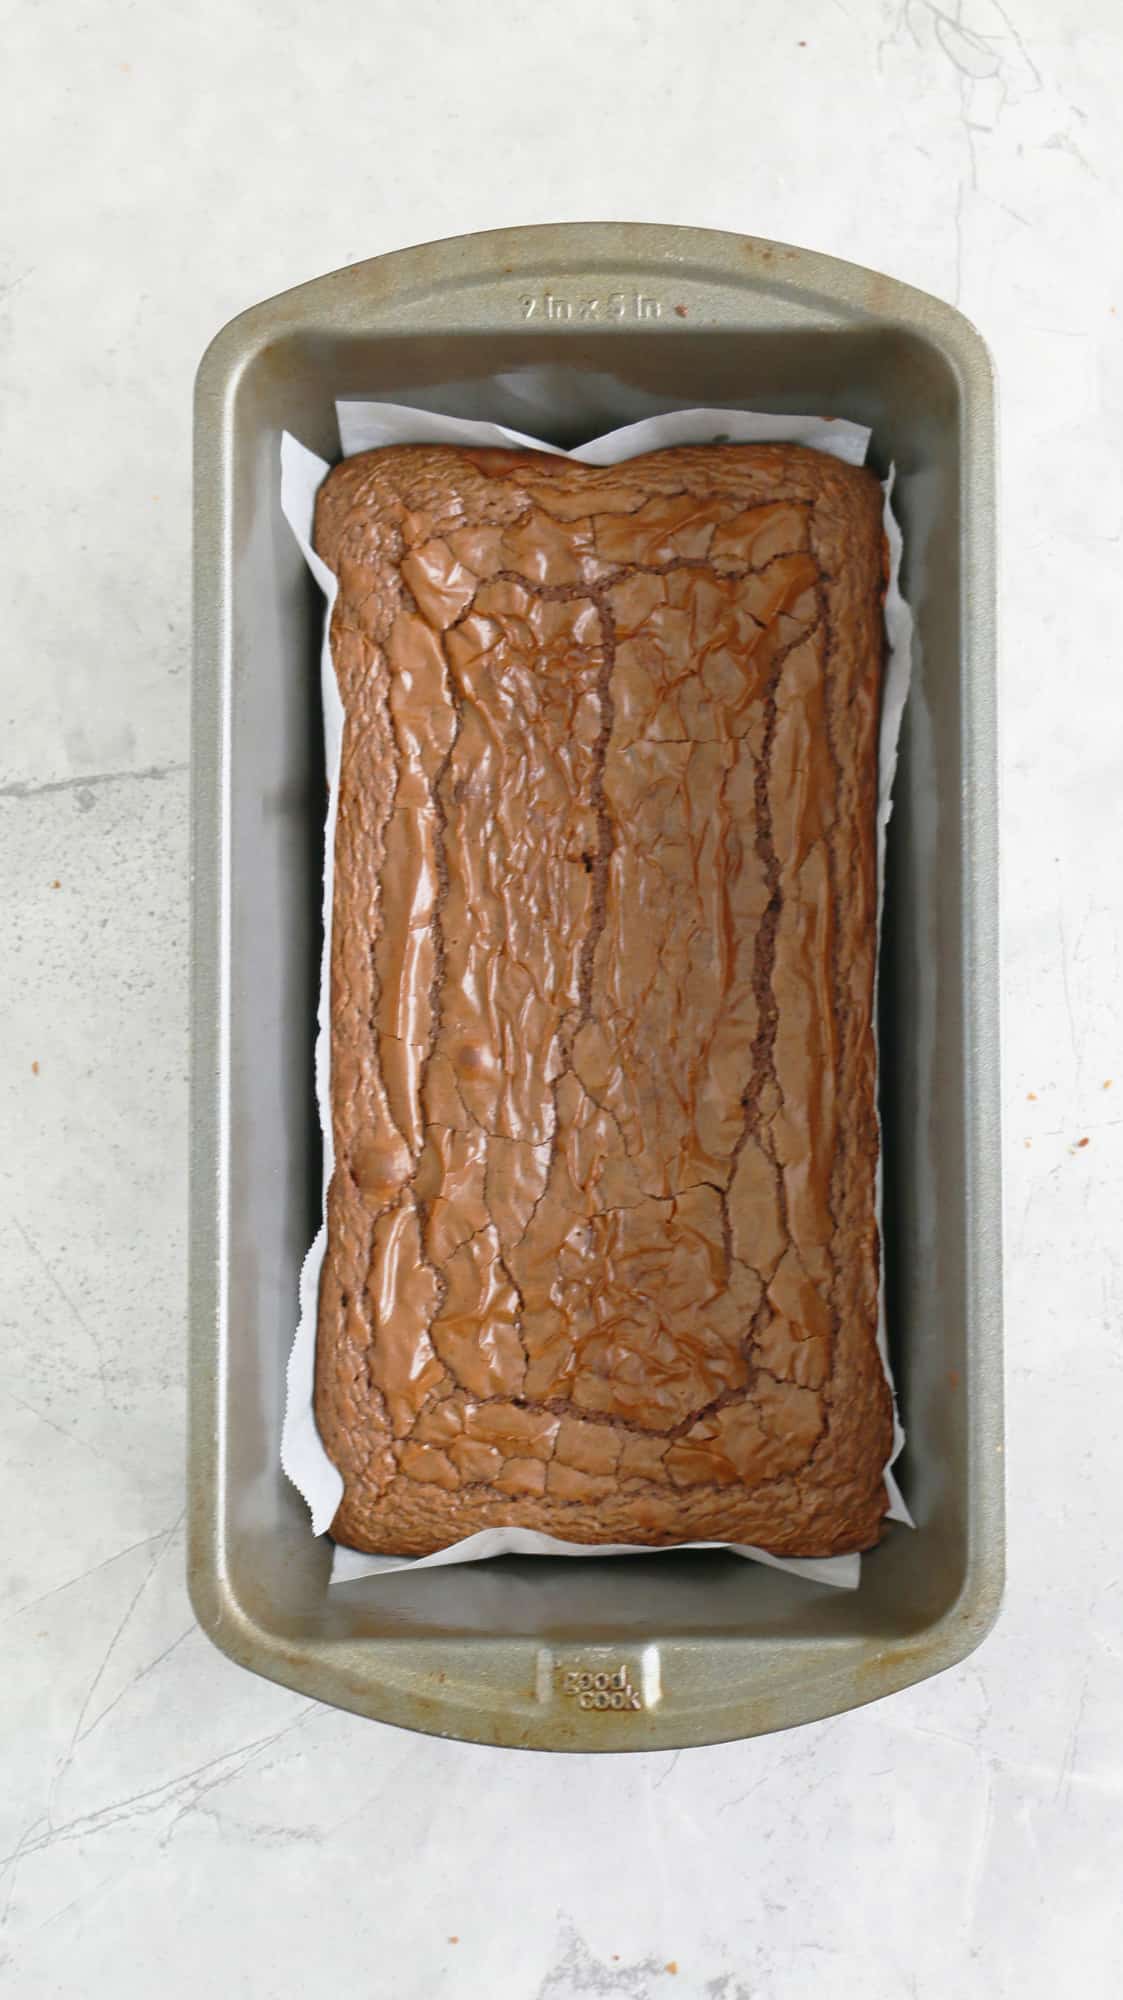 baked nutella brownies in a loaf pan